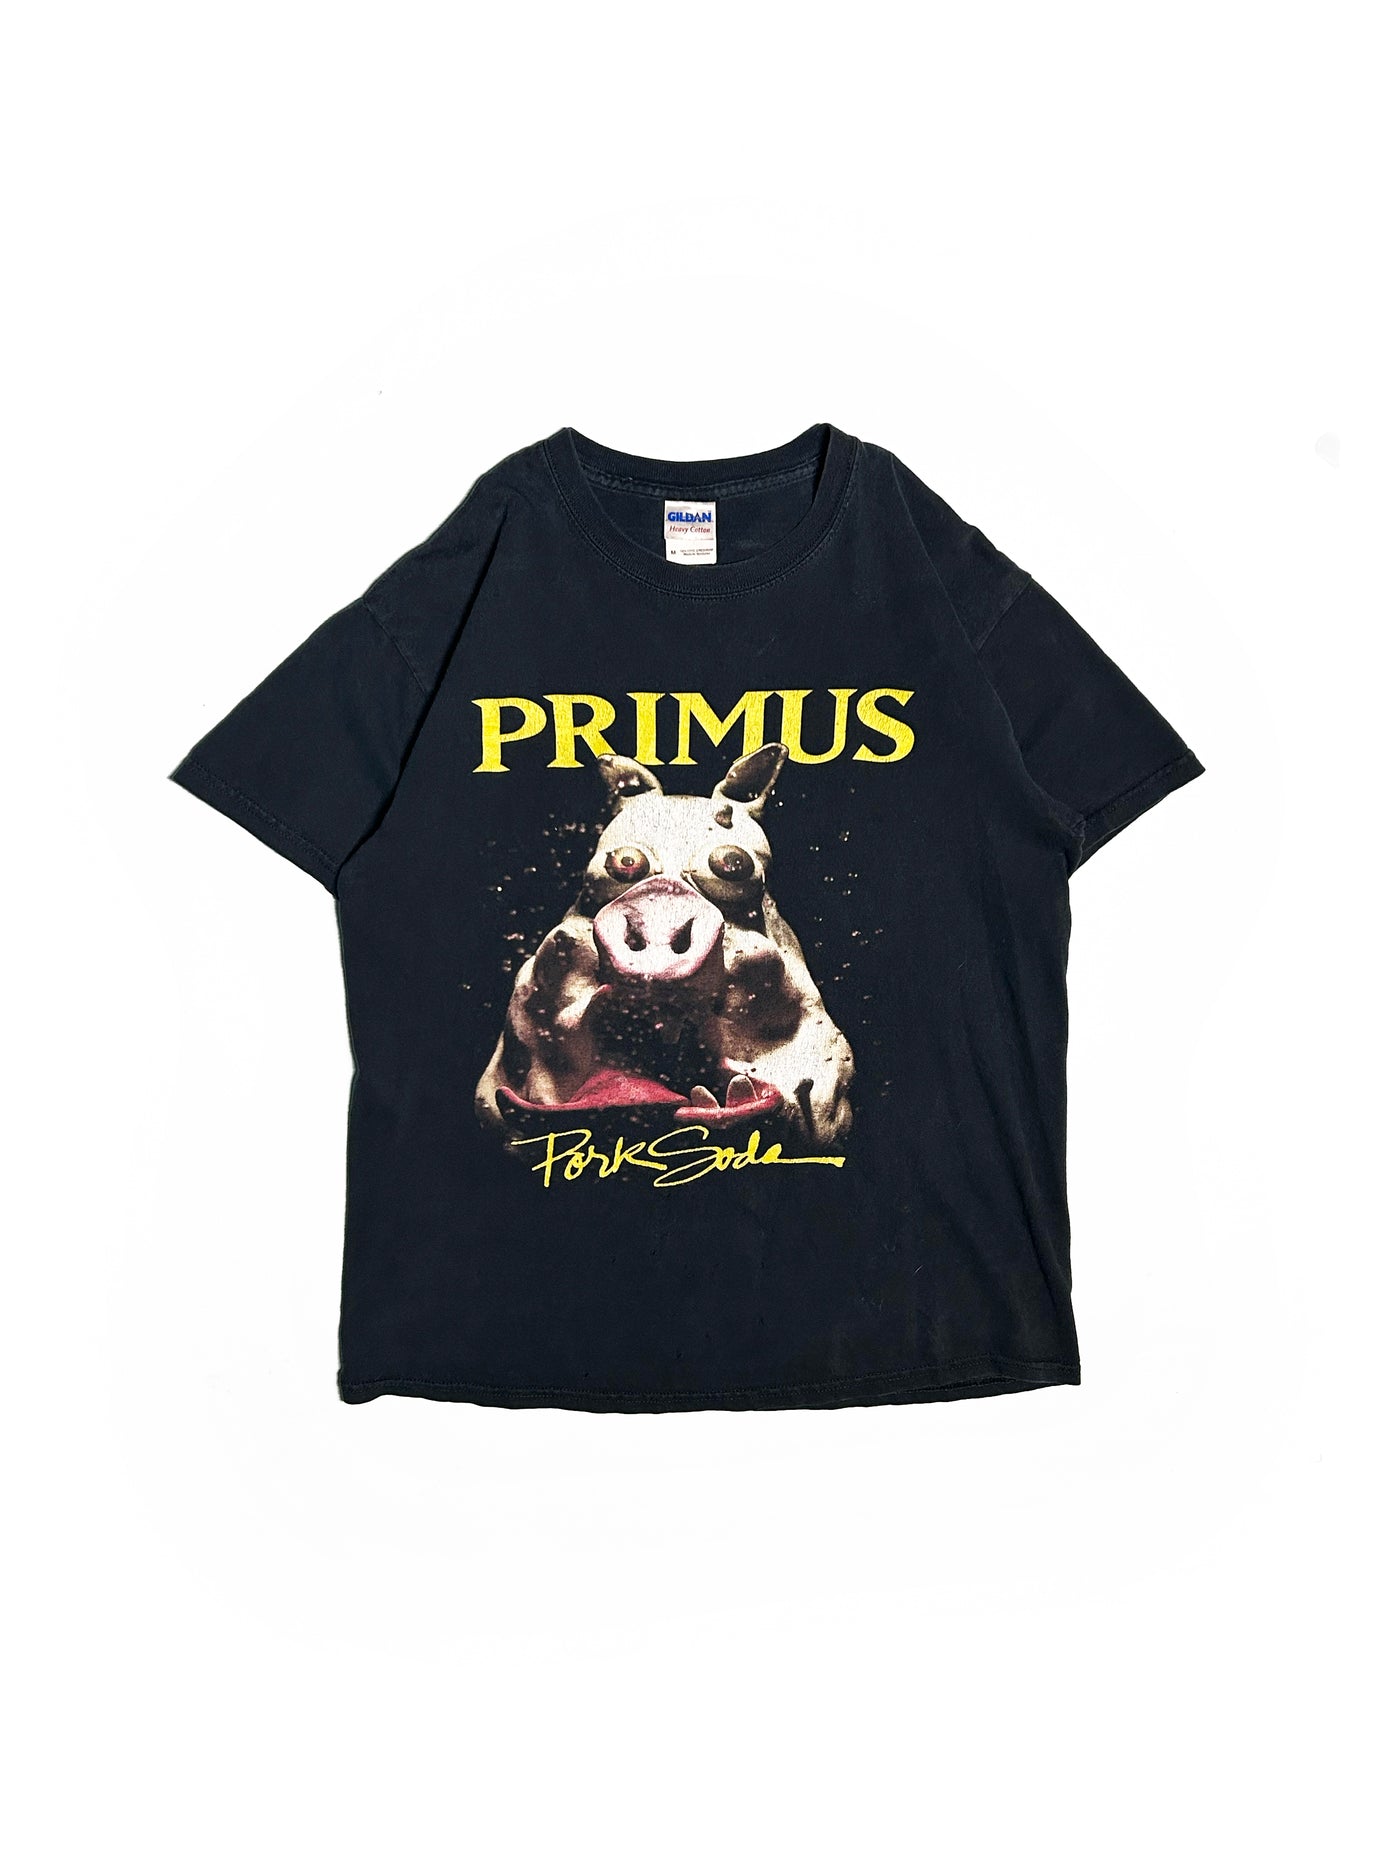 2000s Primus Pork Soda T-Shirt